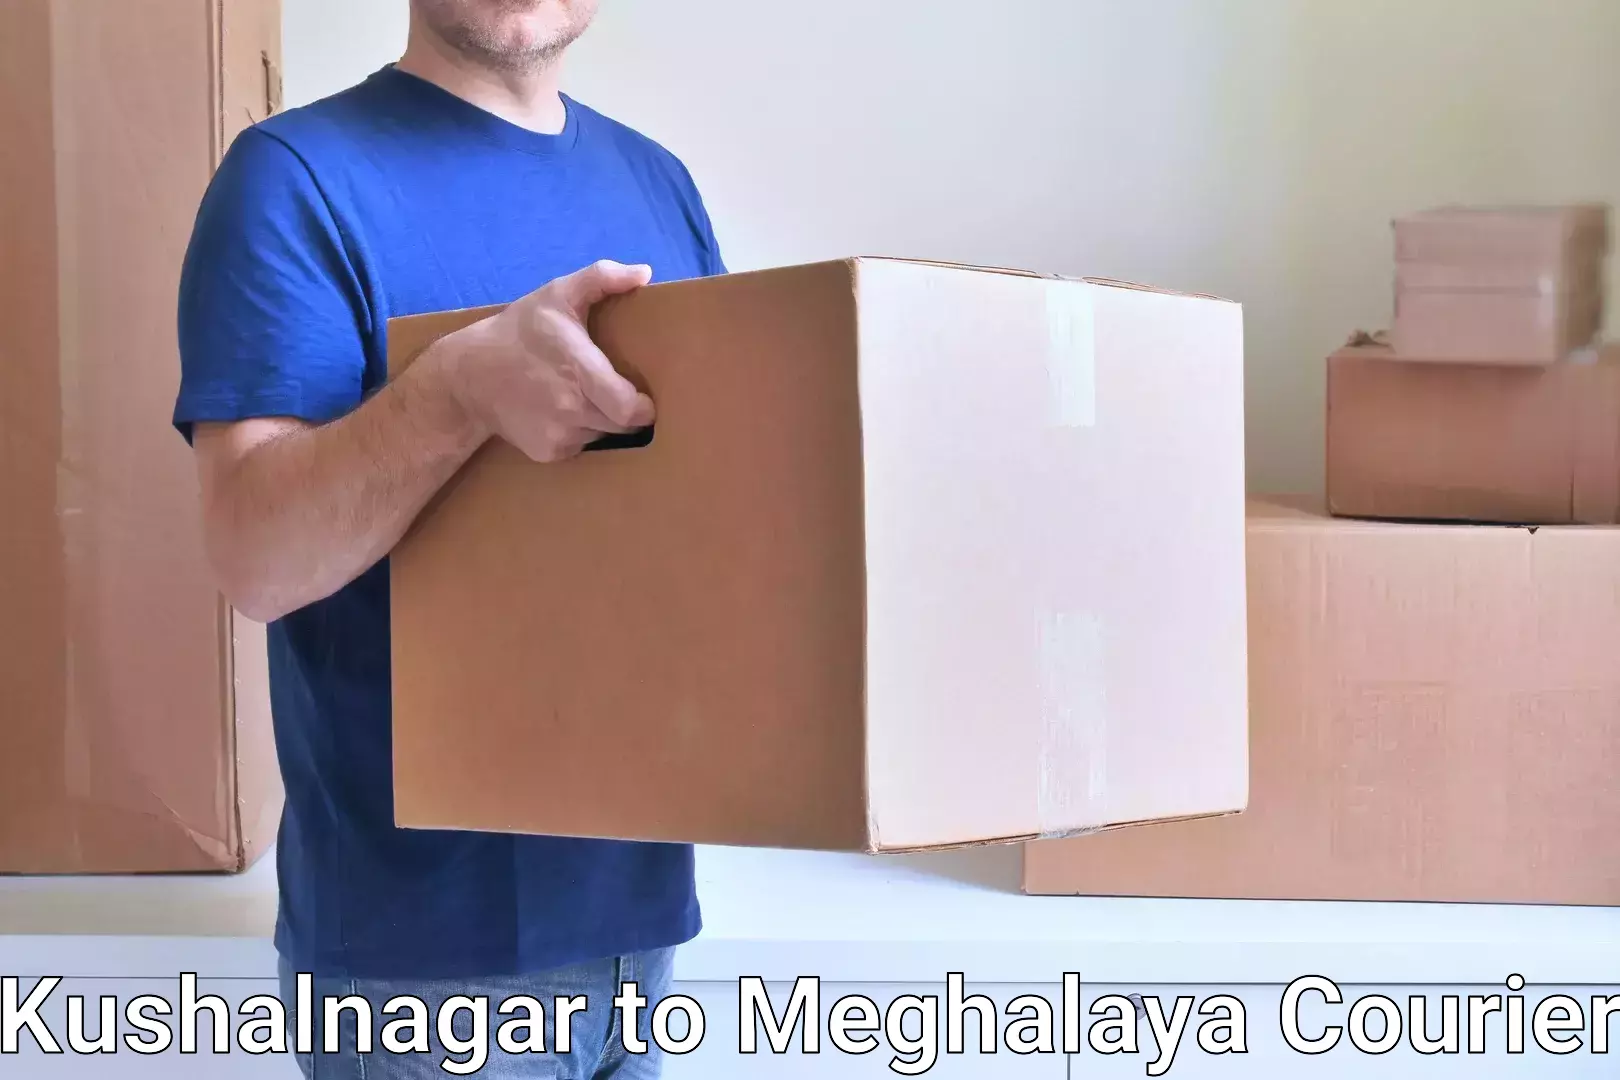 State-of-the-art courier technology Kushalnagar to Garobadha